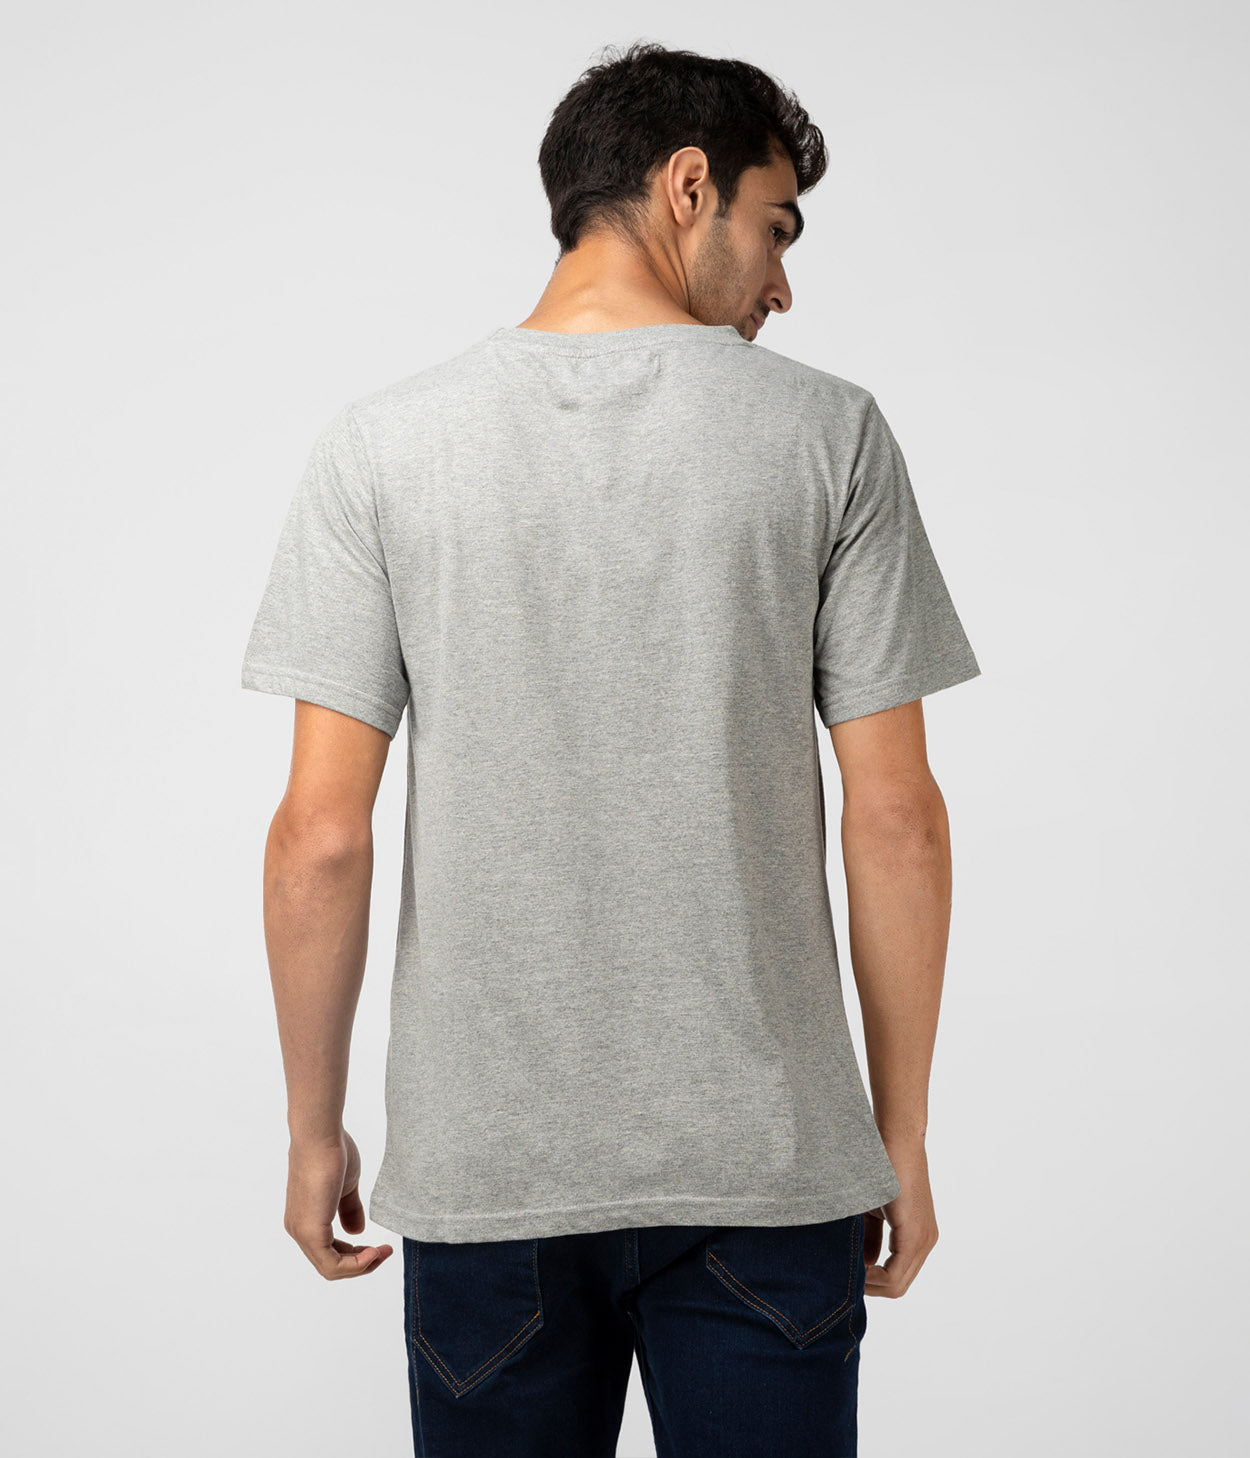 Grey Solid Mens T-Shirt